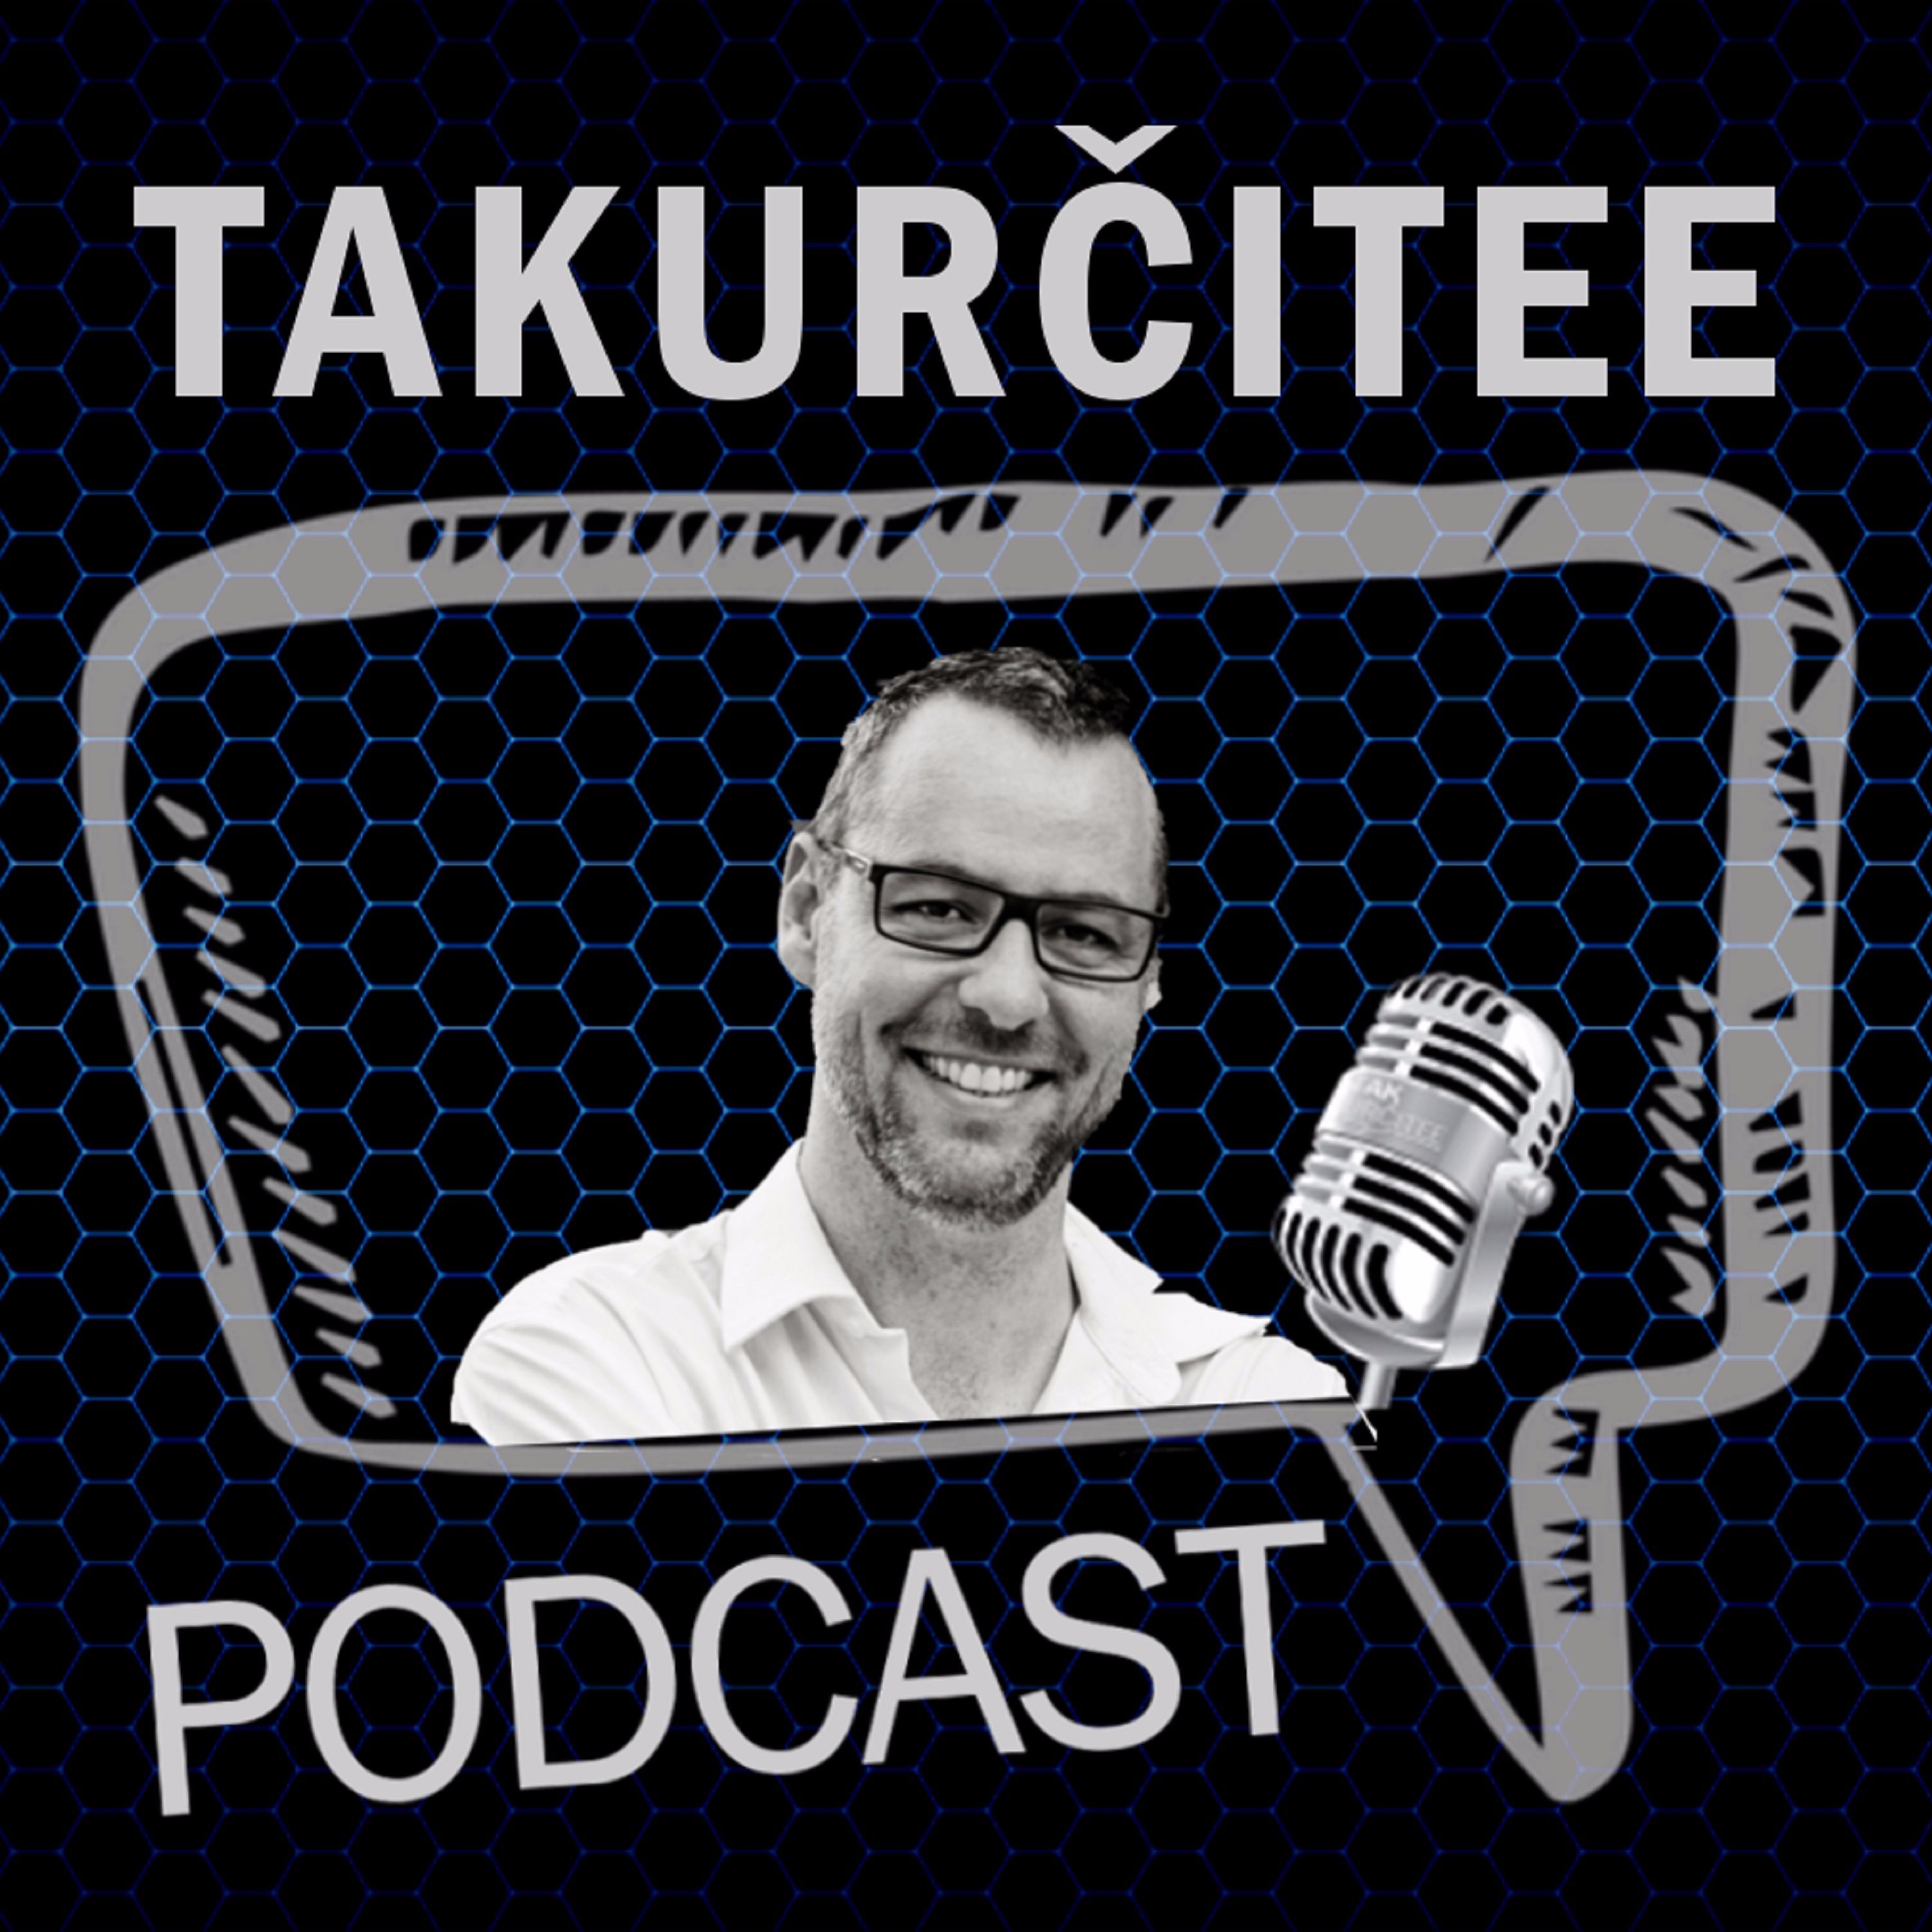 TakUrčitee Podcast, Ep. 29: Stano Staško, prvý športový youtuber